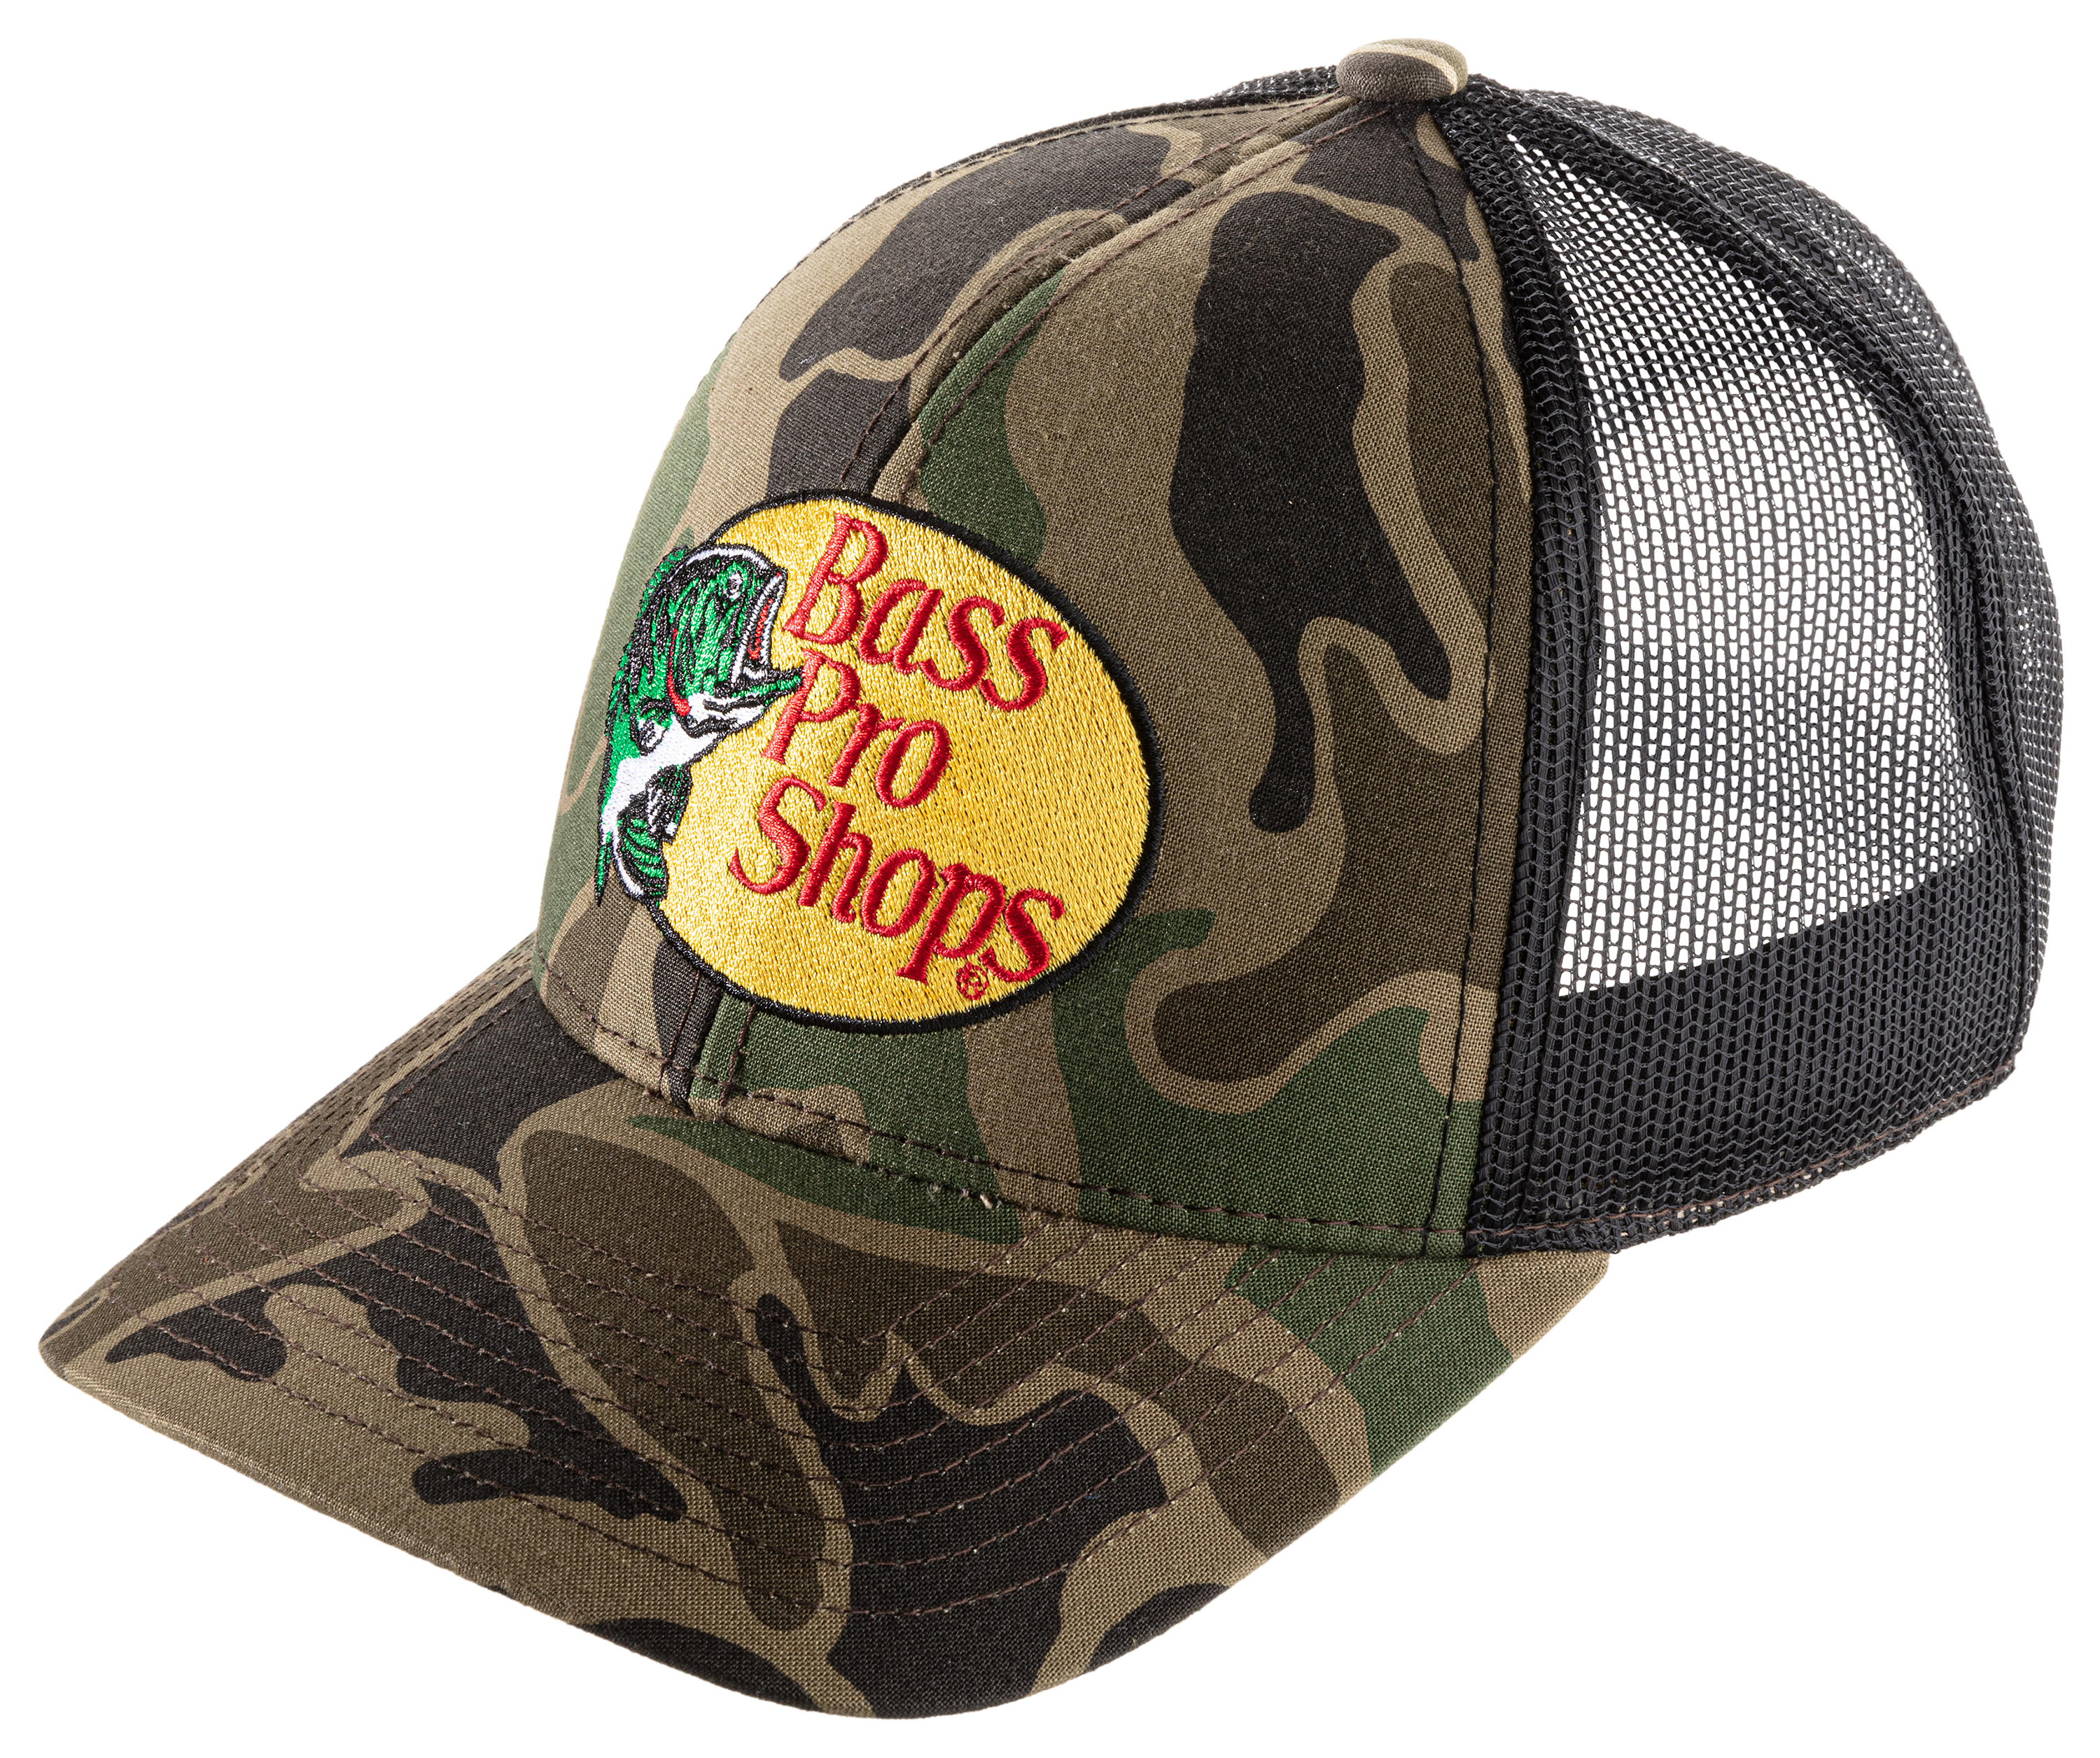 Bass Pro Shops Hats for Men